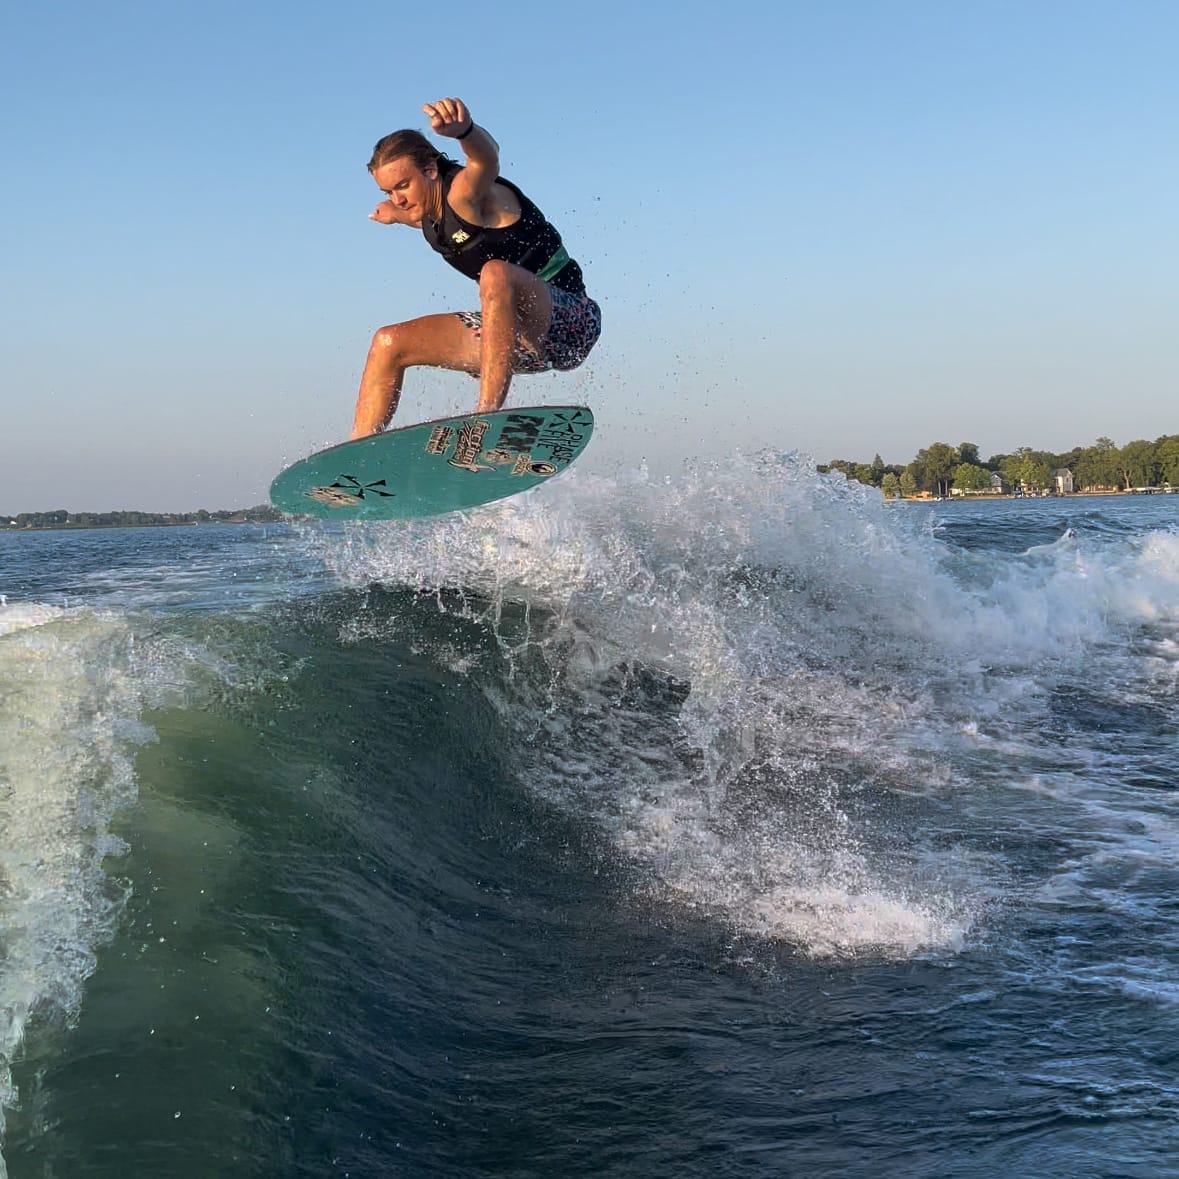 Cade Lybeck riding a wave on a surfboard.